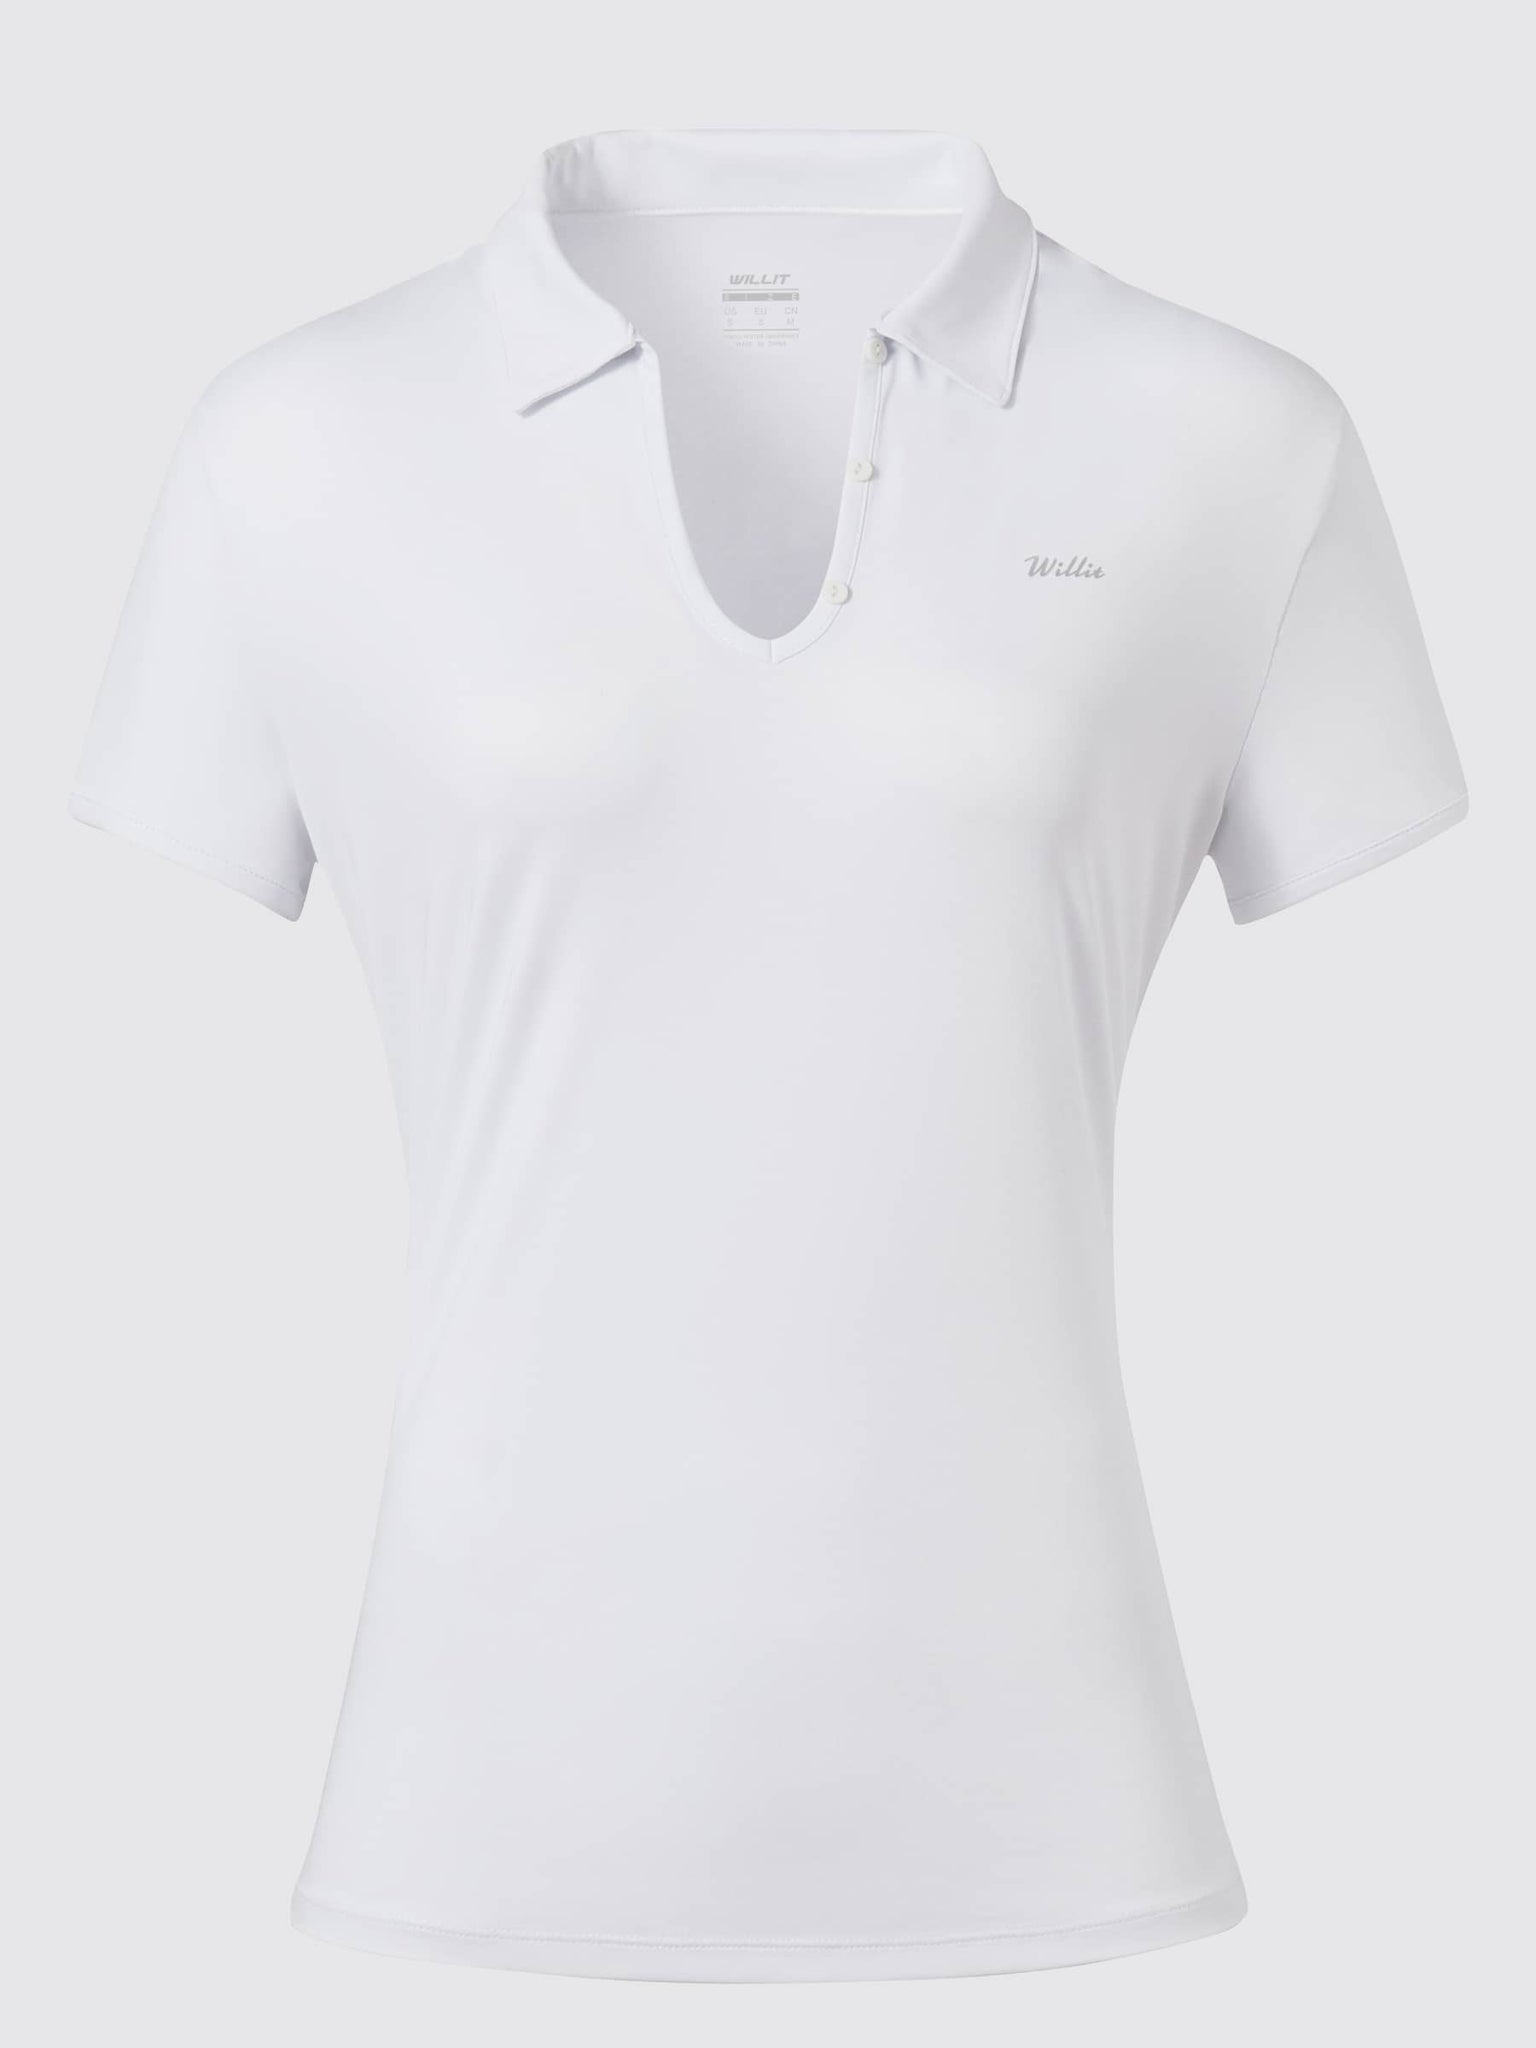 Willit Women's Golf Polo Short Sleeve Shirts_White1